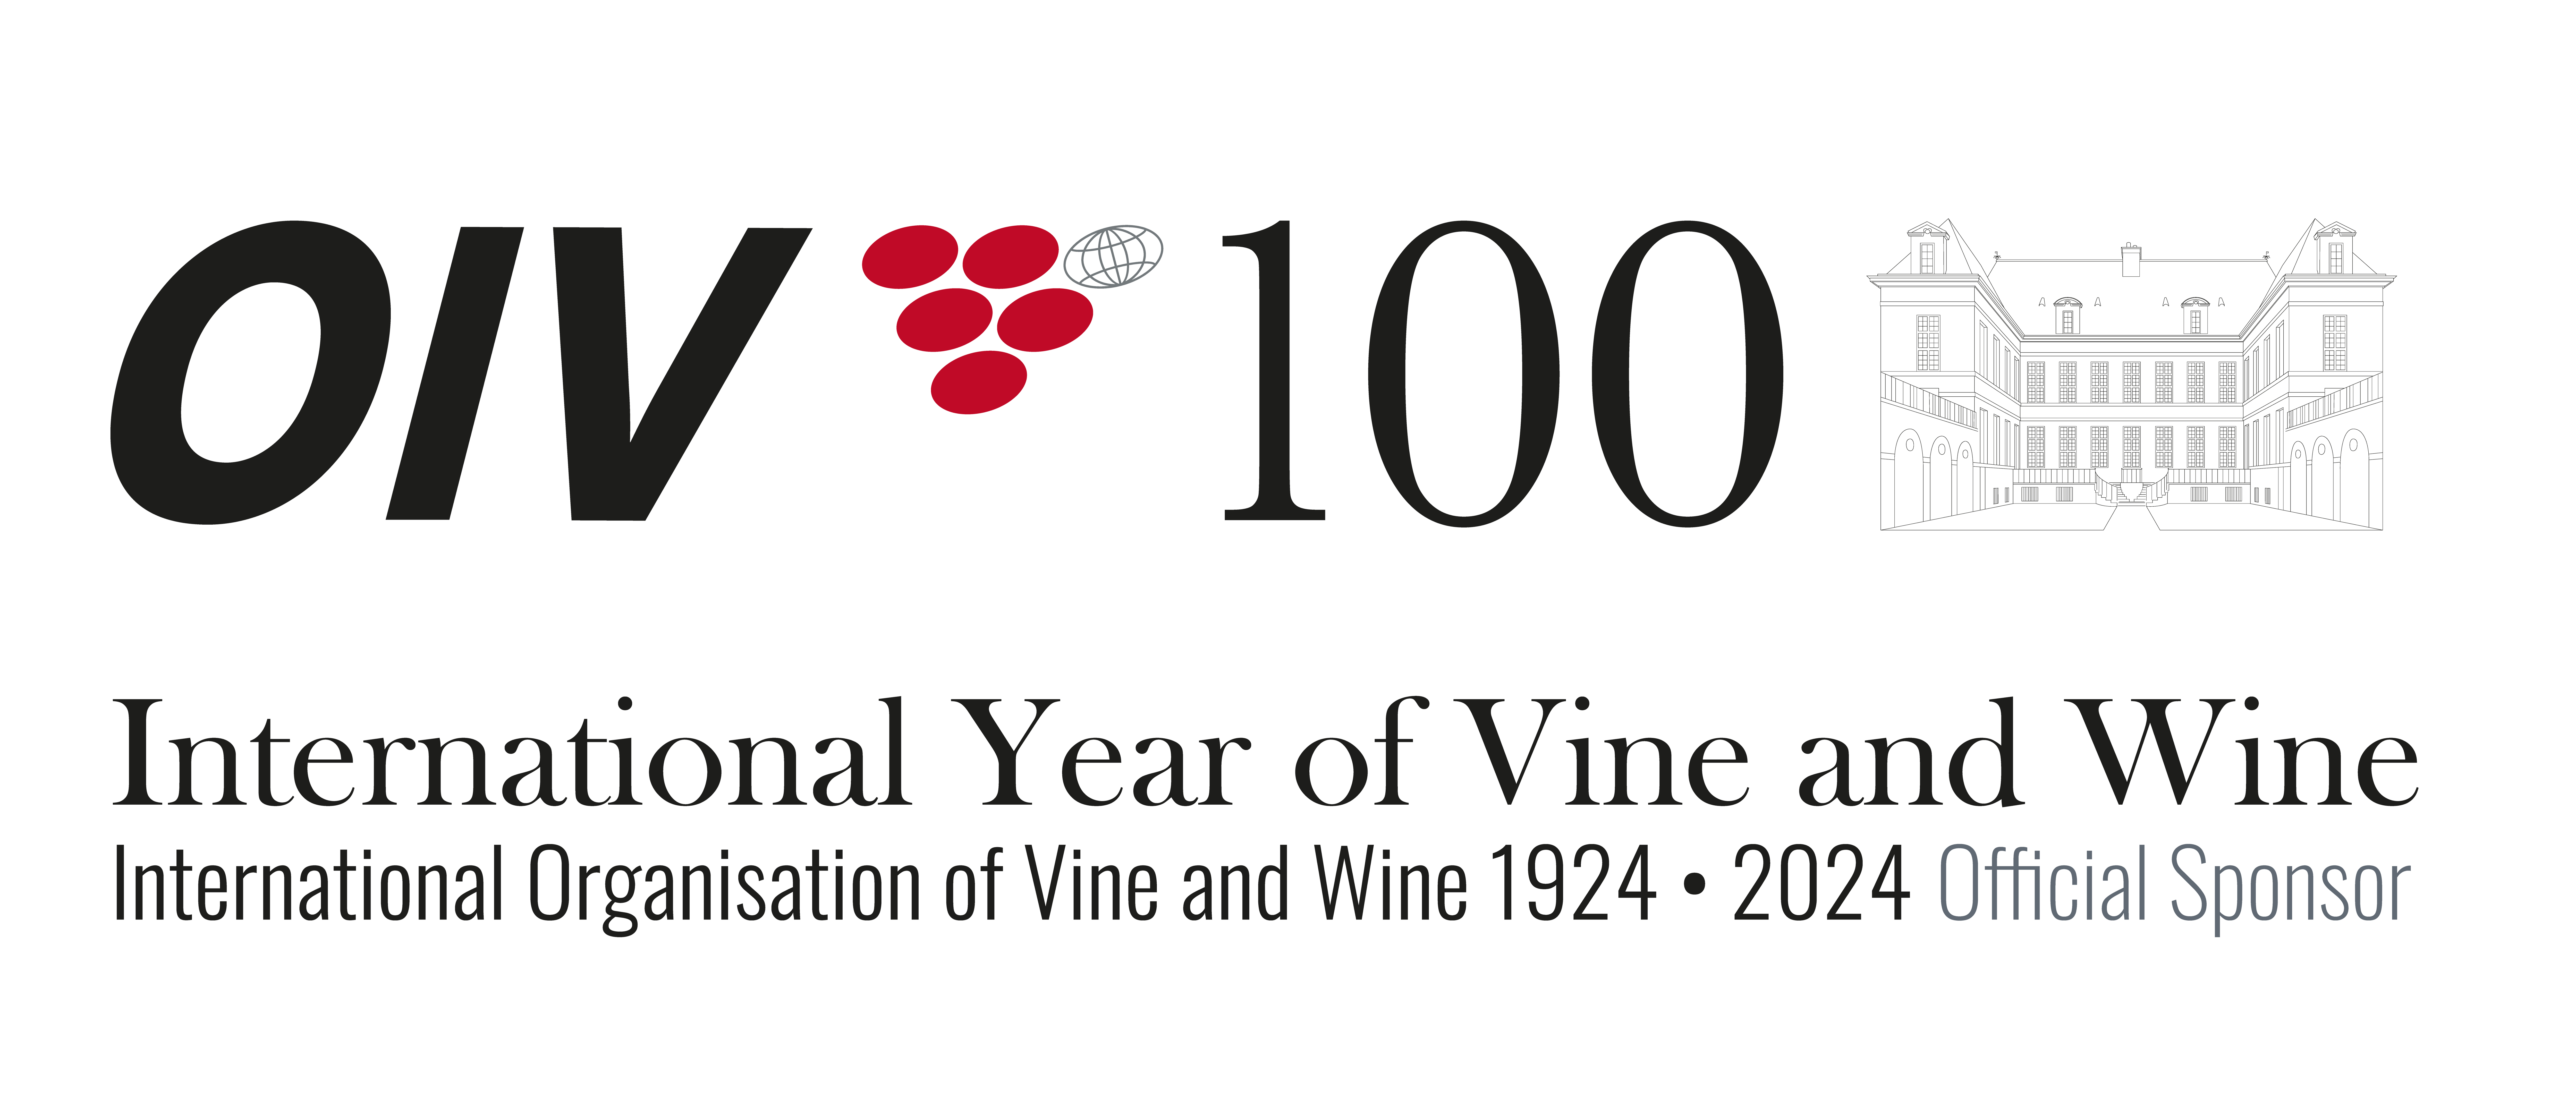 International Organization of Vine and Win e - (O.I.V.)